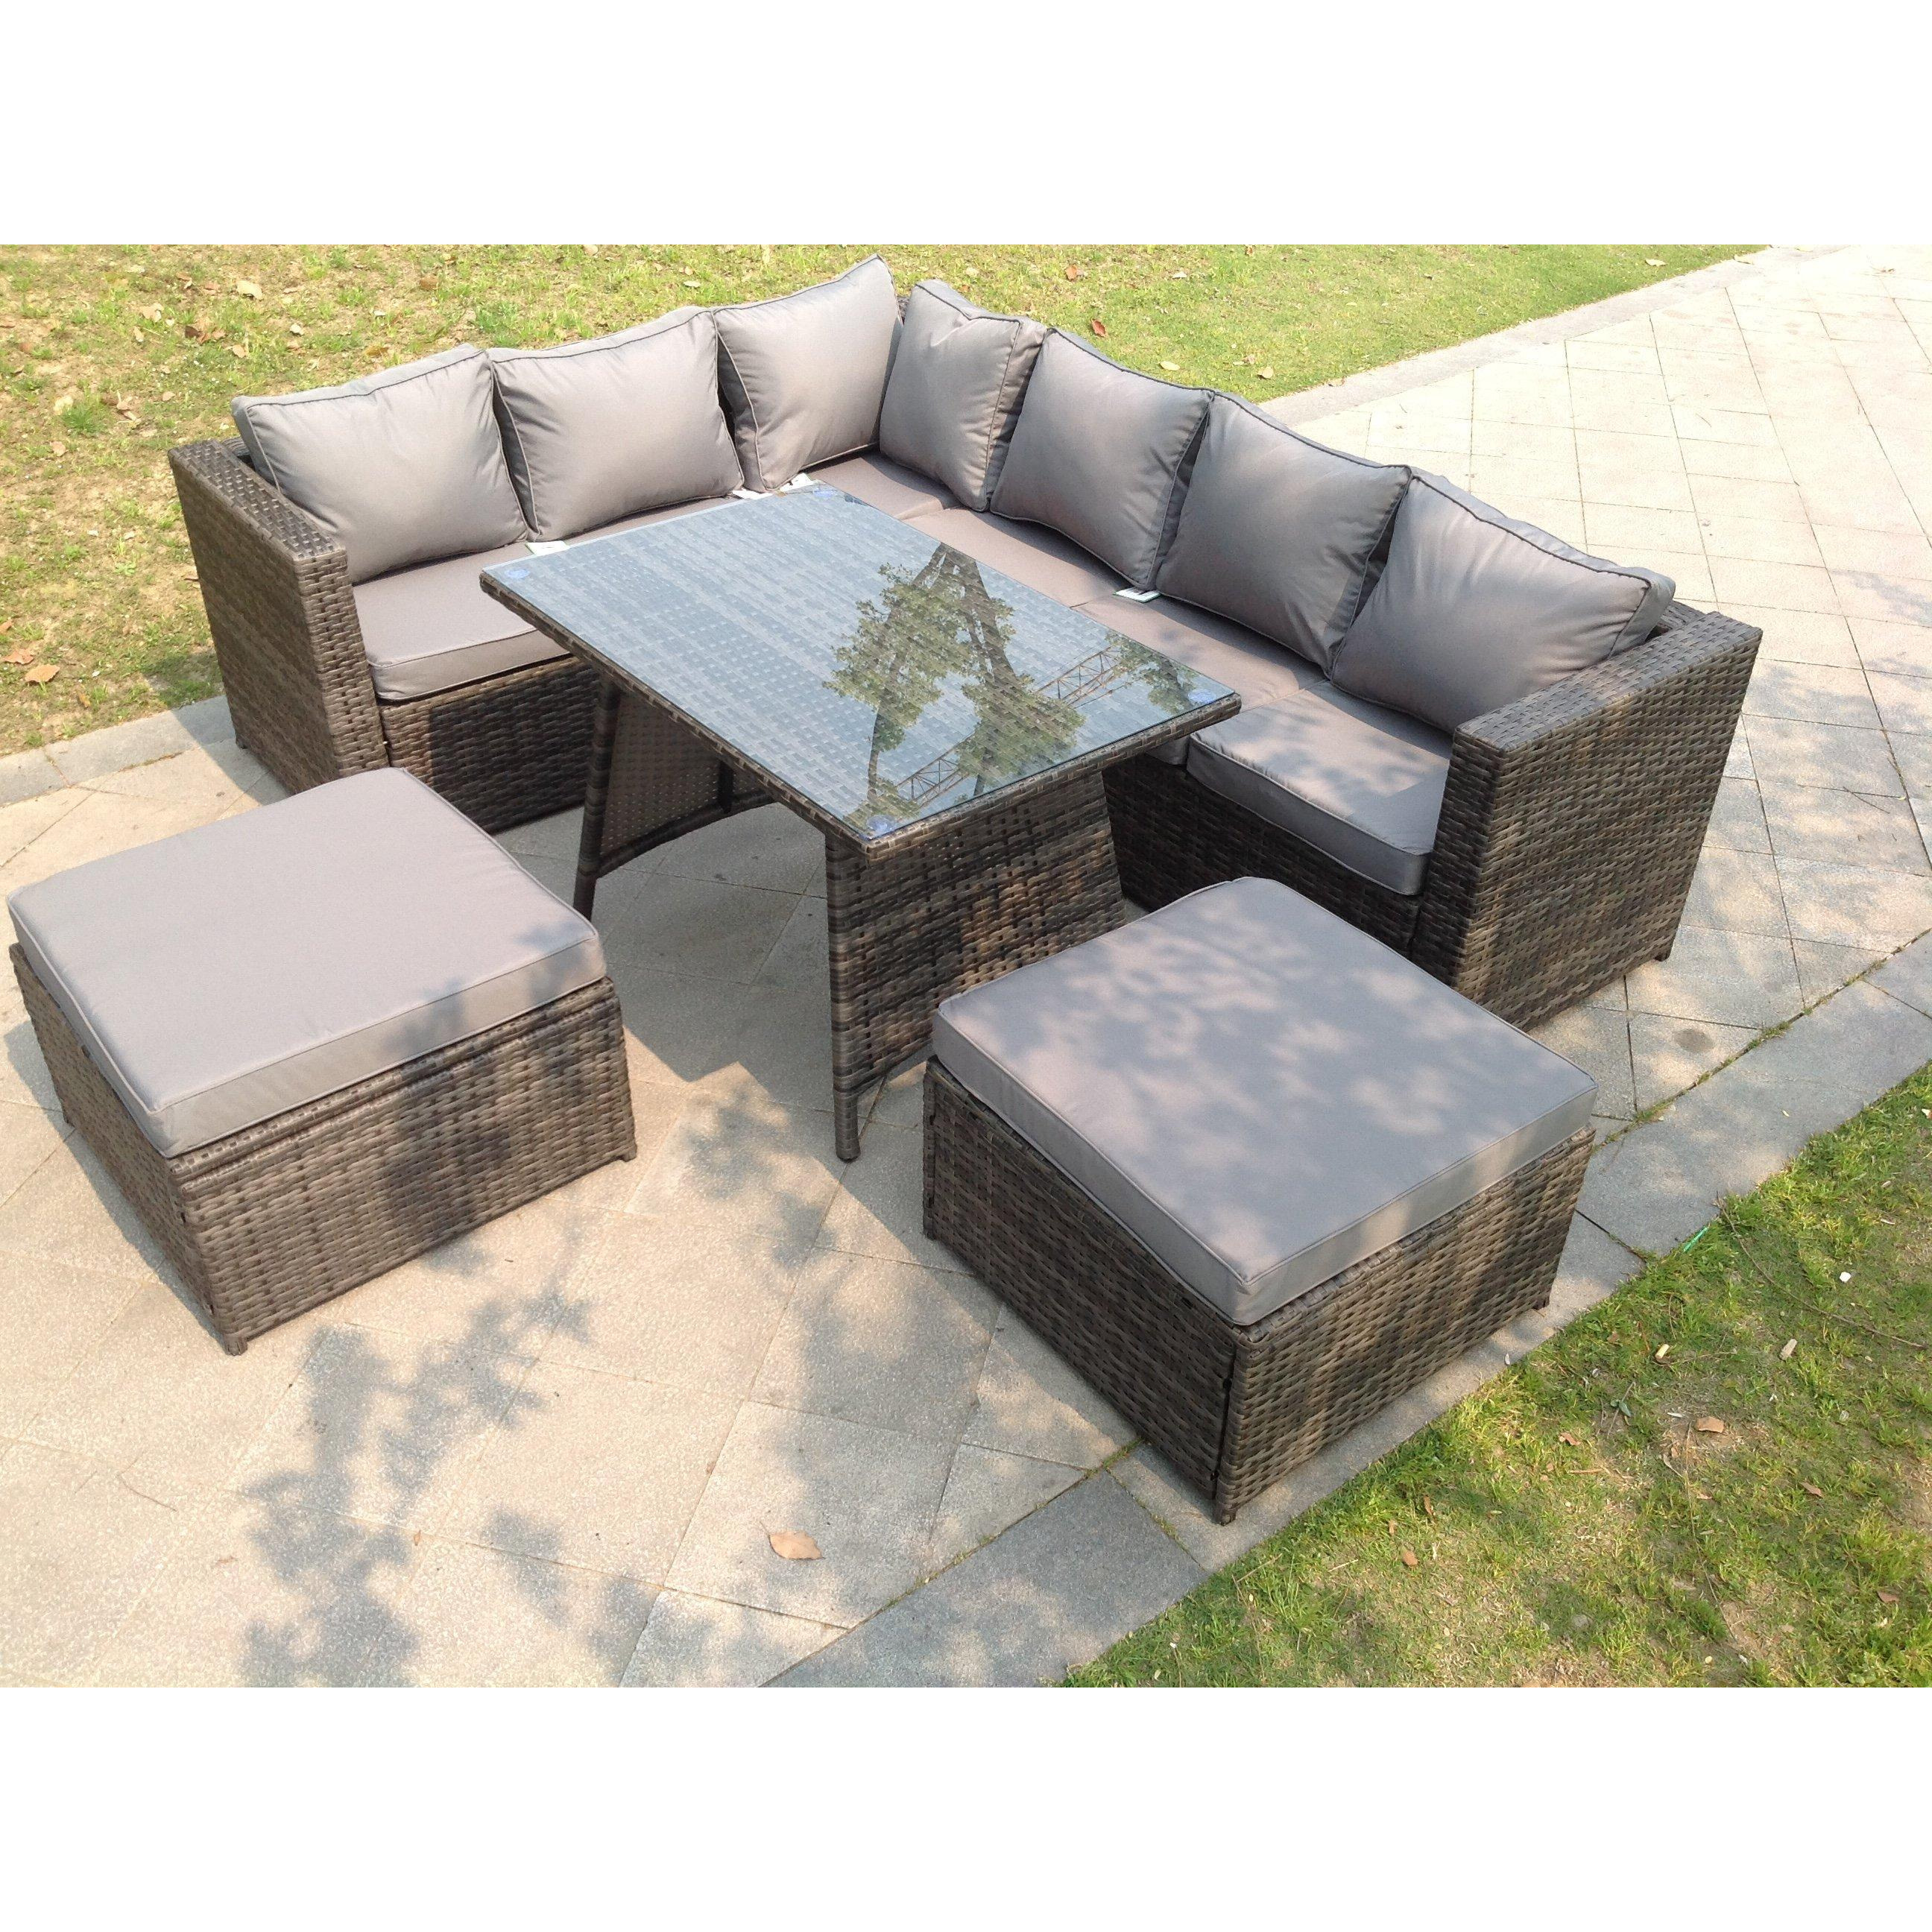 8 Seater Rattan Corner Sofa Set Dining Table 2 Big Footstool Garden Furniture Outdoor - image 1